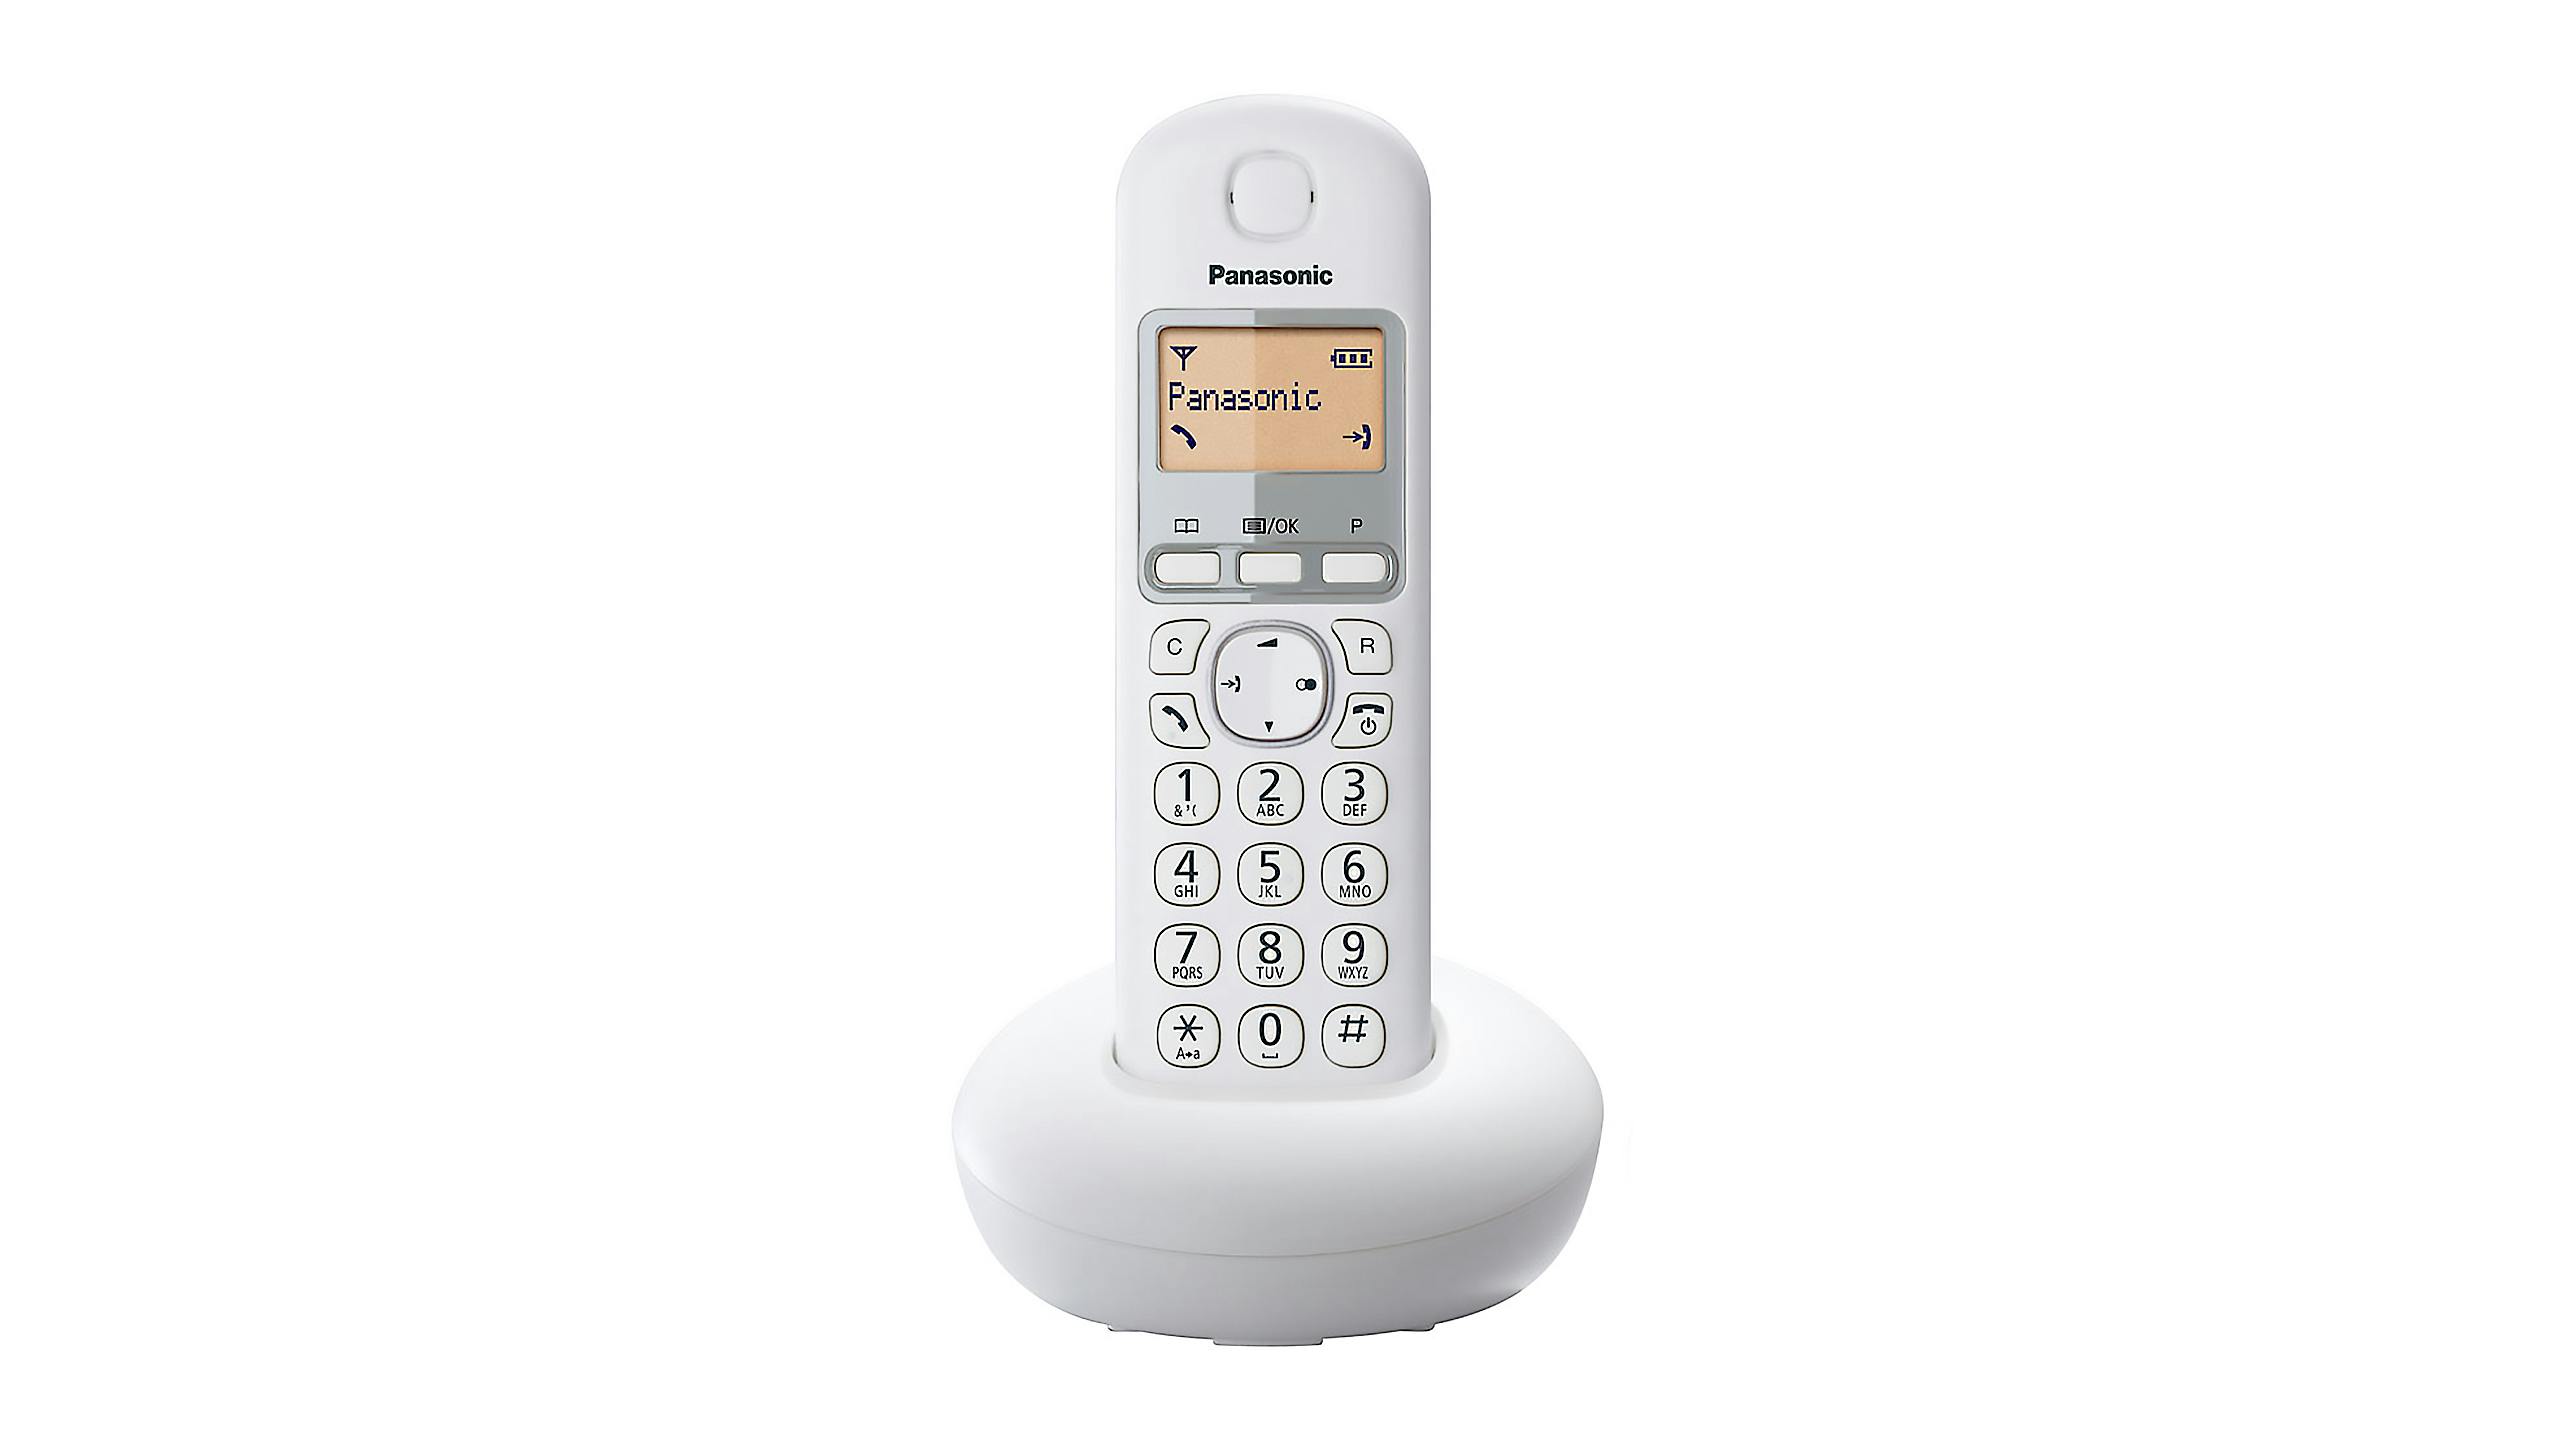 Panasonic KX-TGB210 Single Handset Cordless Phone - White